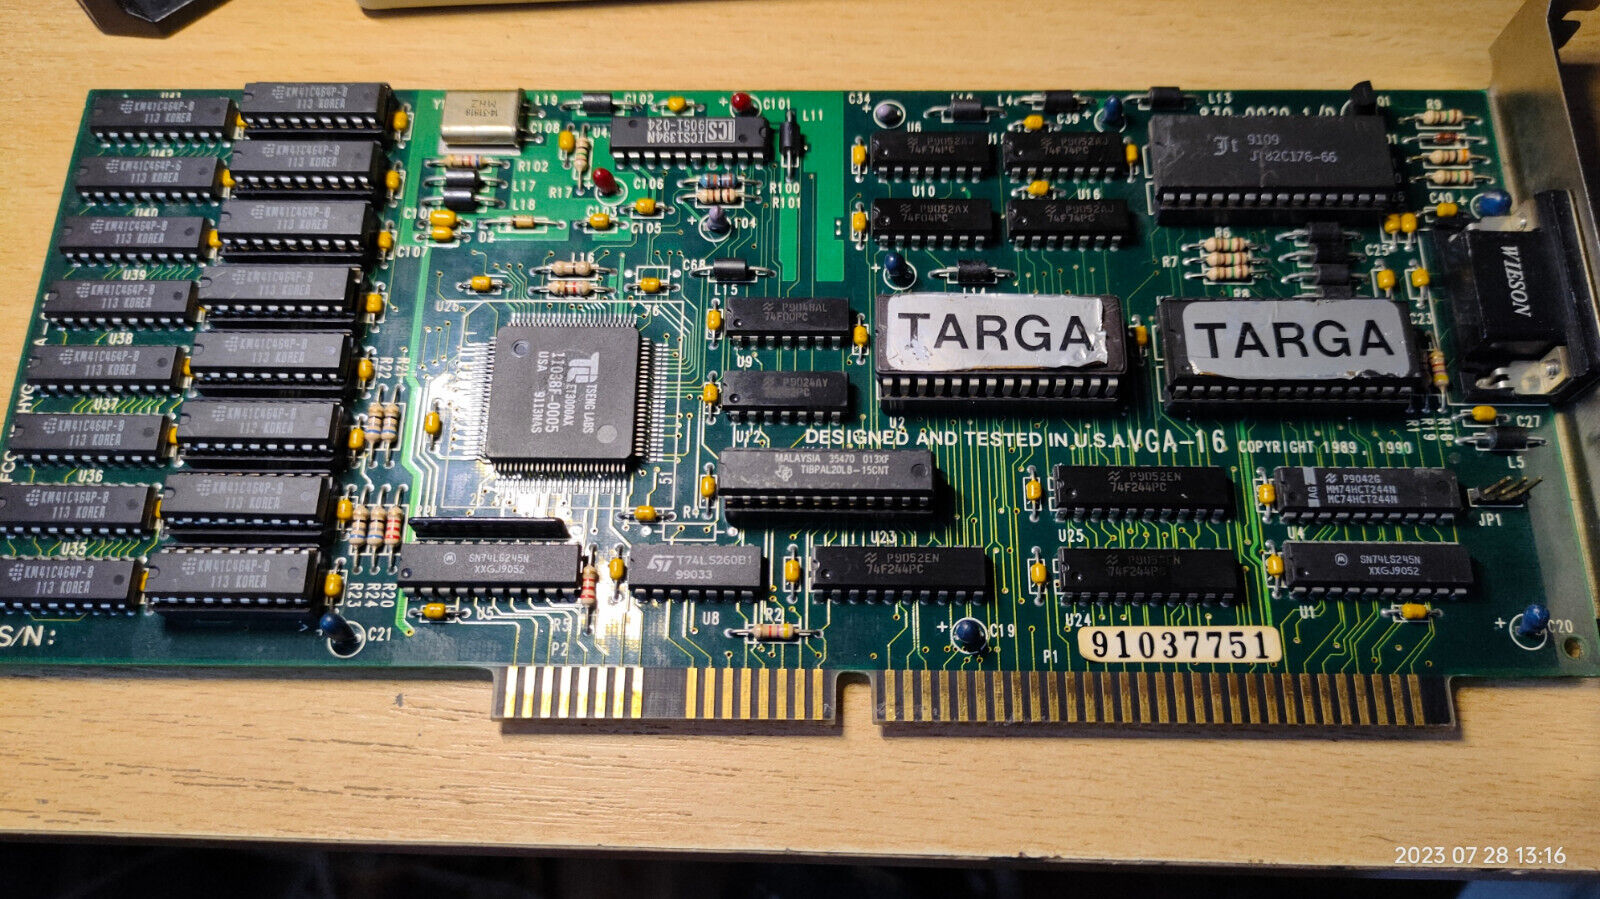 1989 ISA Videocard VGA-16 /Focus Information Tseng ET3000AX (HYG-VGA-020) 512 KB